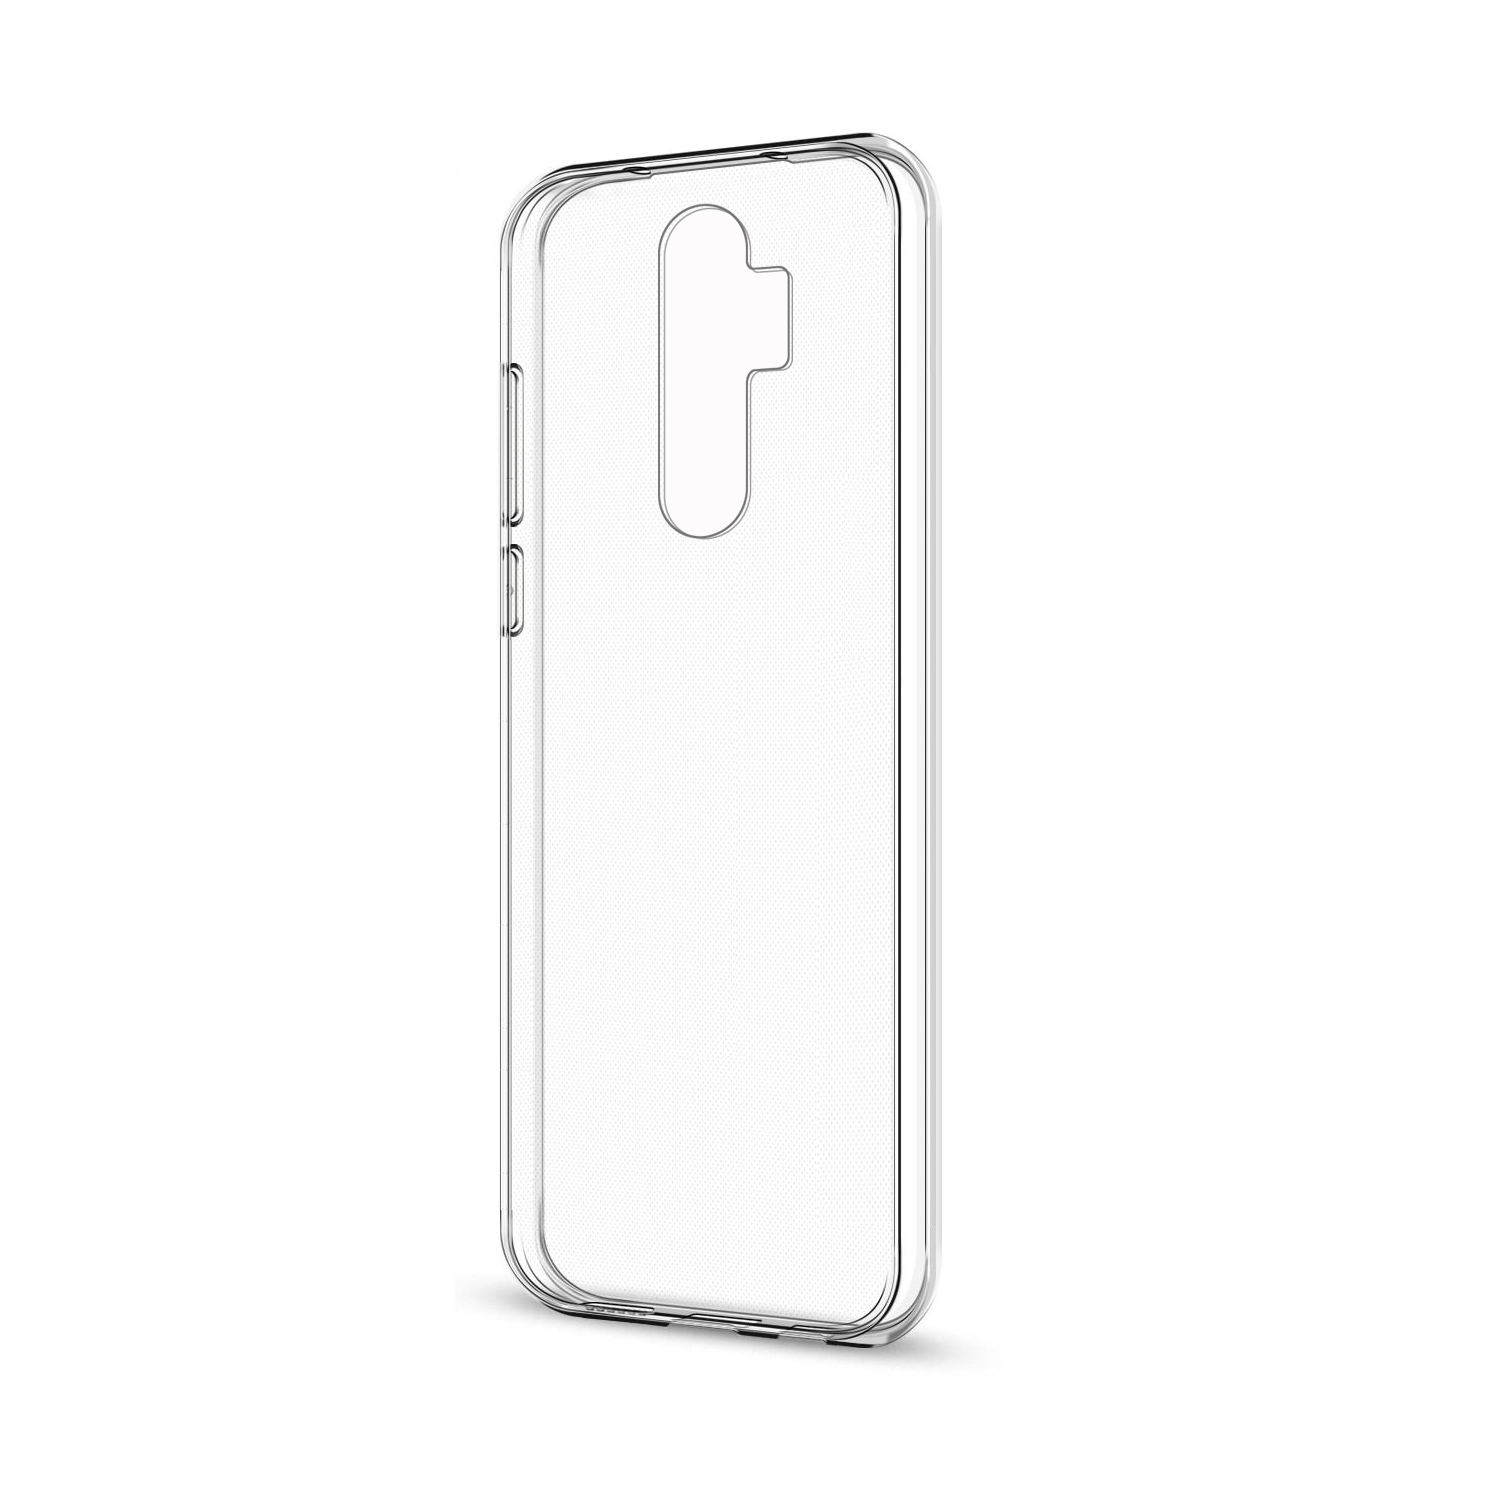 Чехол Xiaomi Note 8 pro TPU 1.0mm прозрачный (без обмена и возврата)